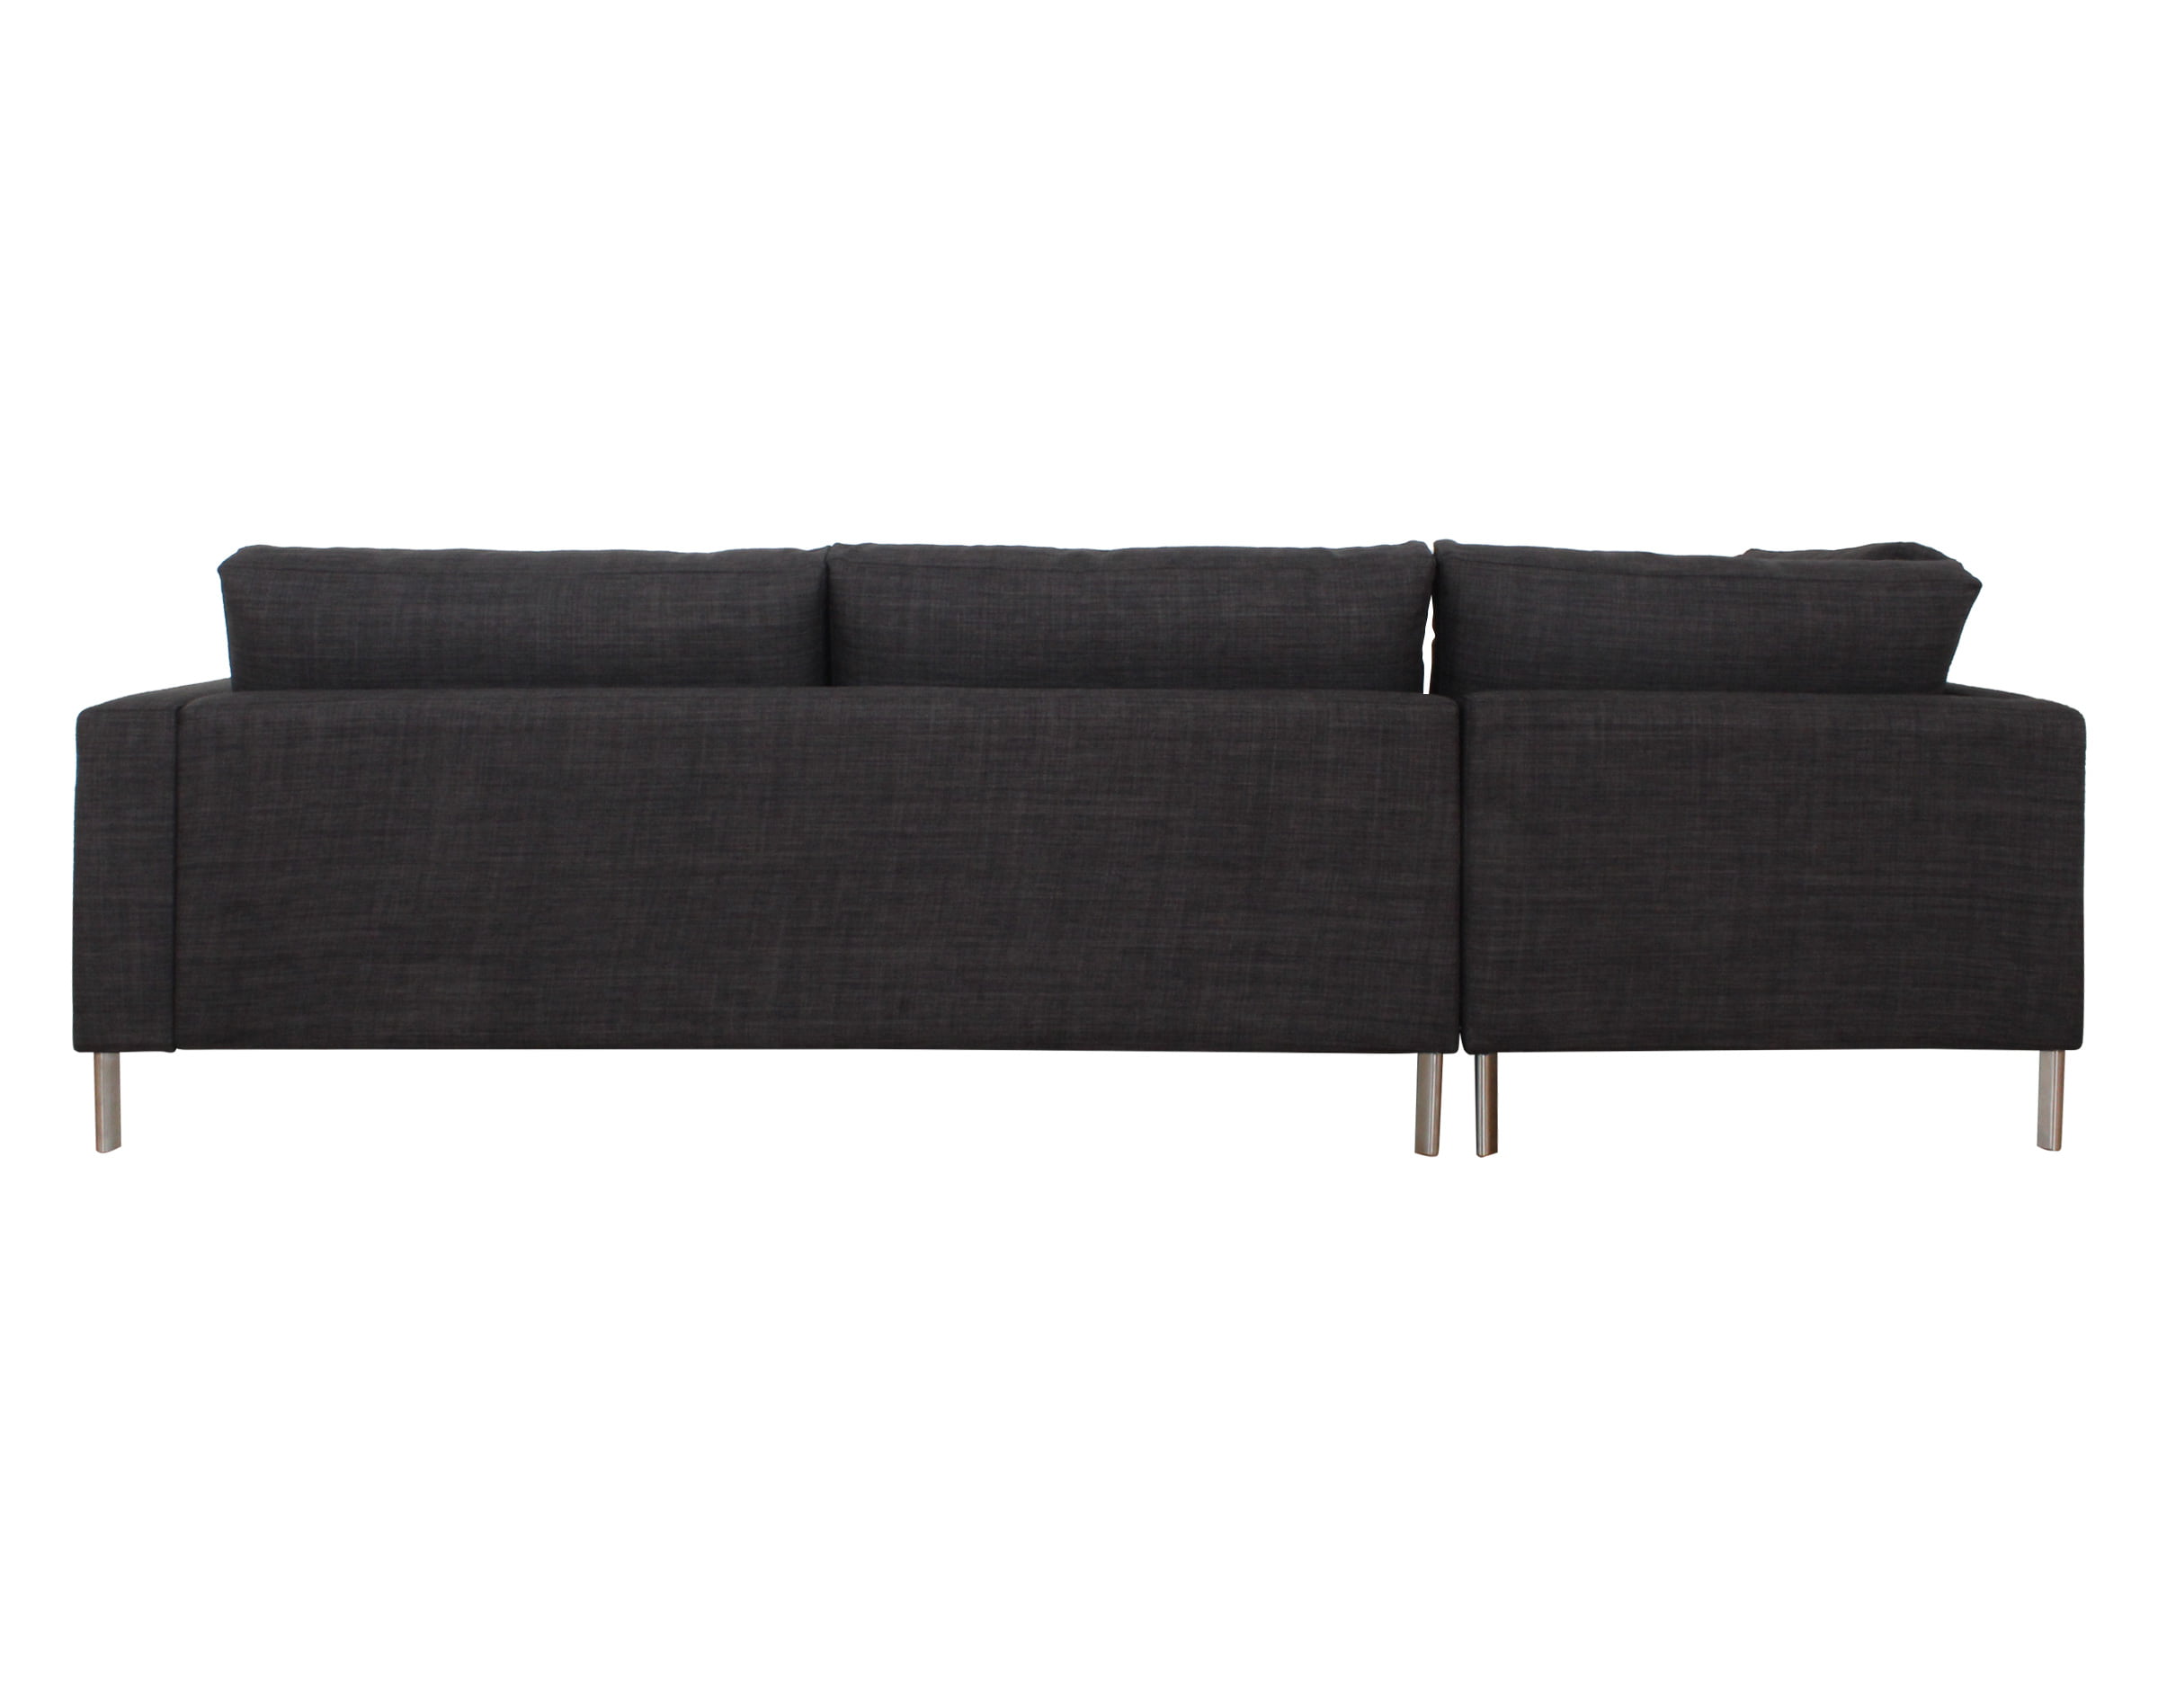 sofa modular izquierdo espacio libre bariloche marengo pata biselada plata 8